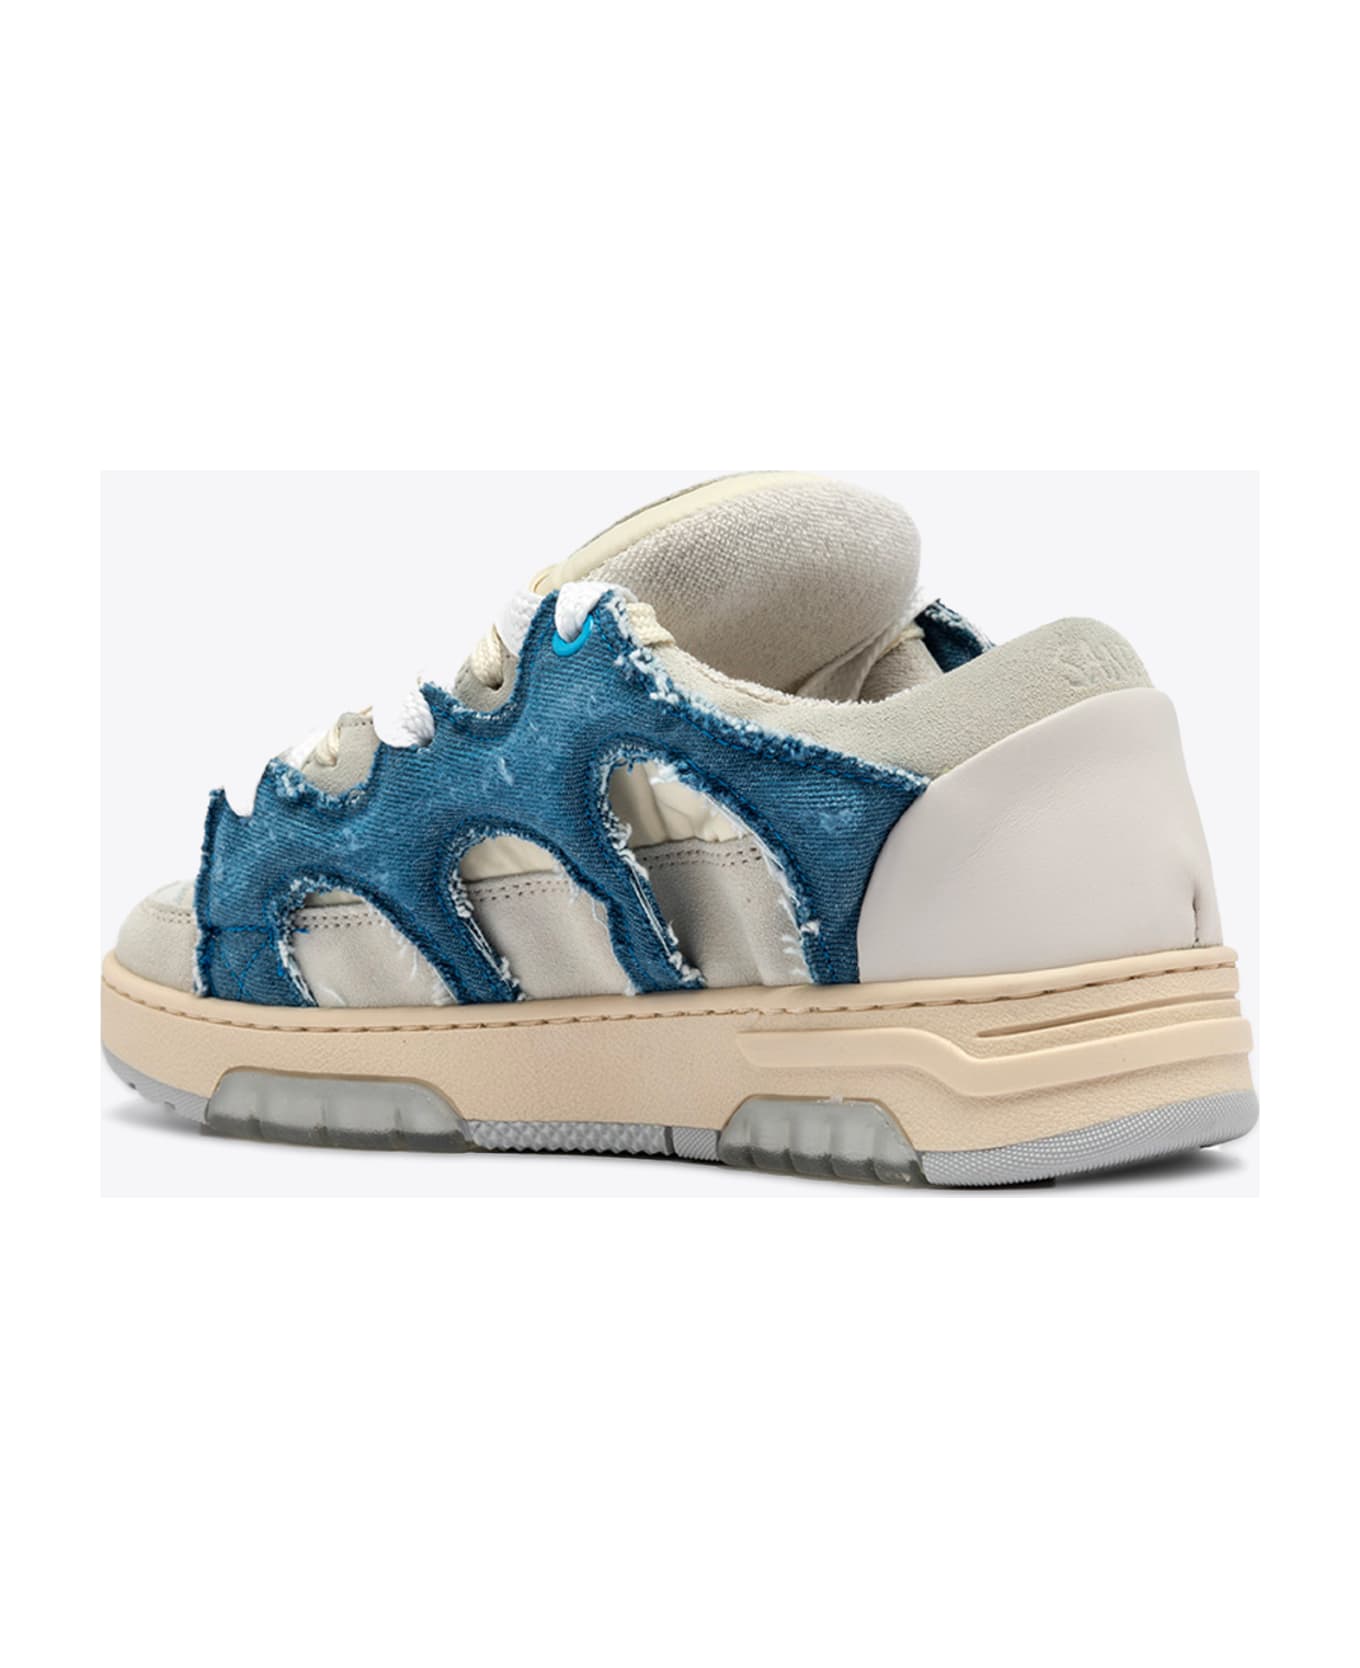 Paura Santha 1 Off white suede and blue denim low sneaker - Denim